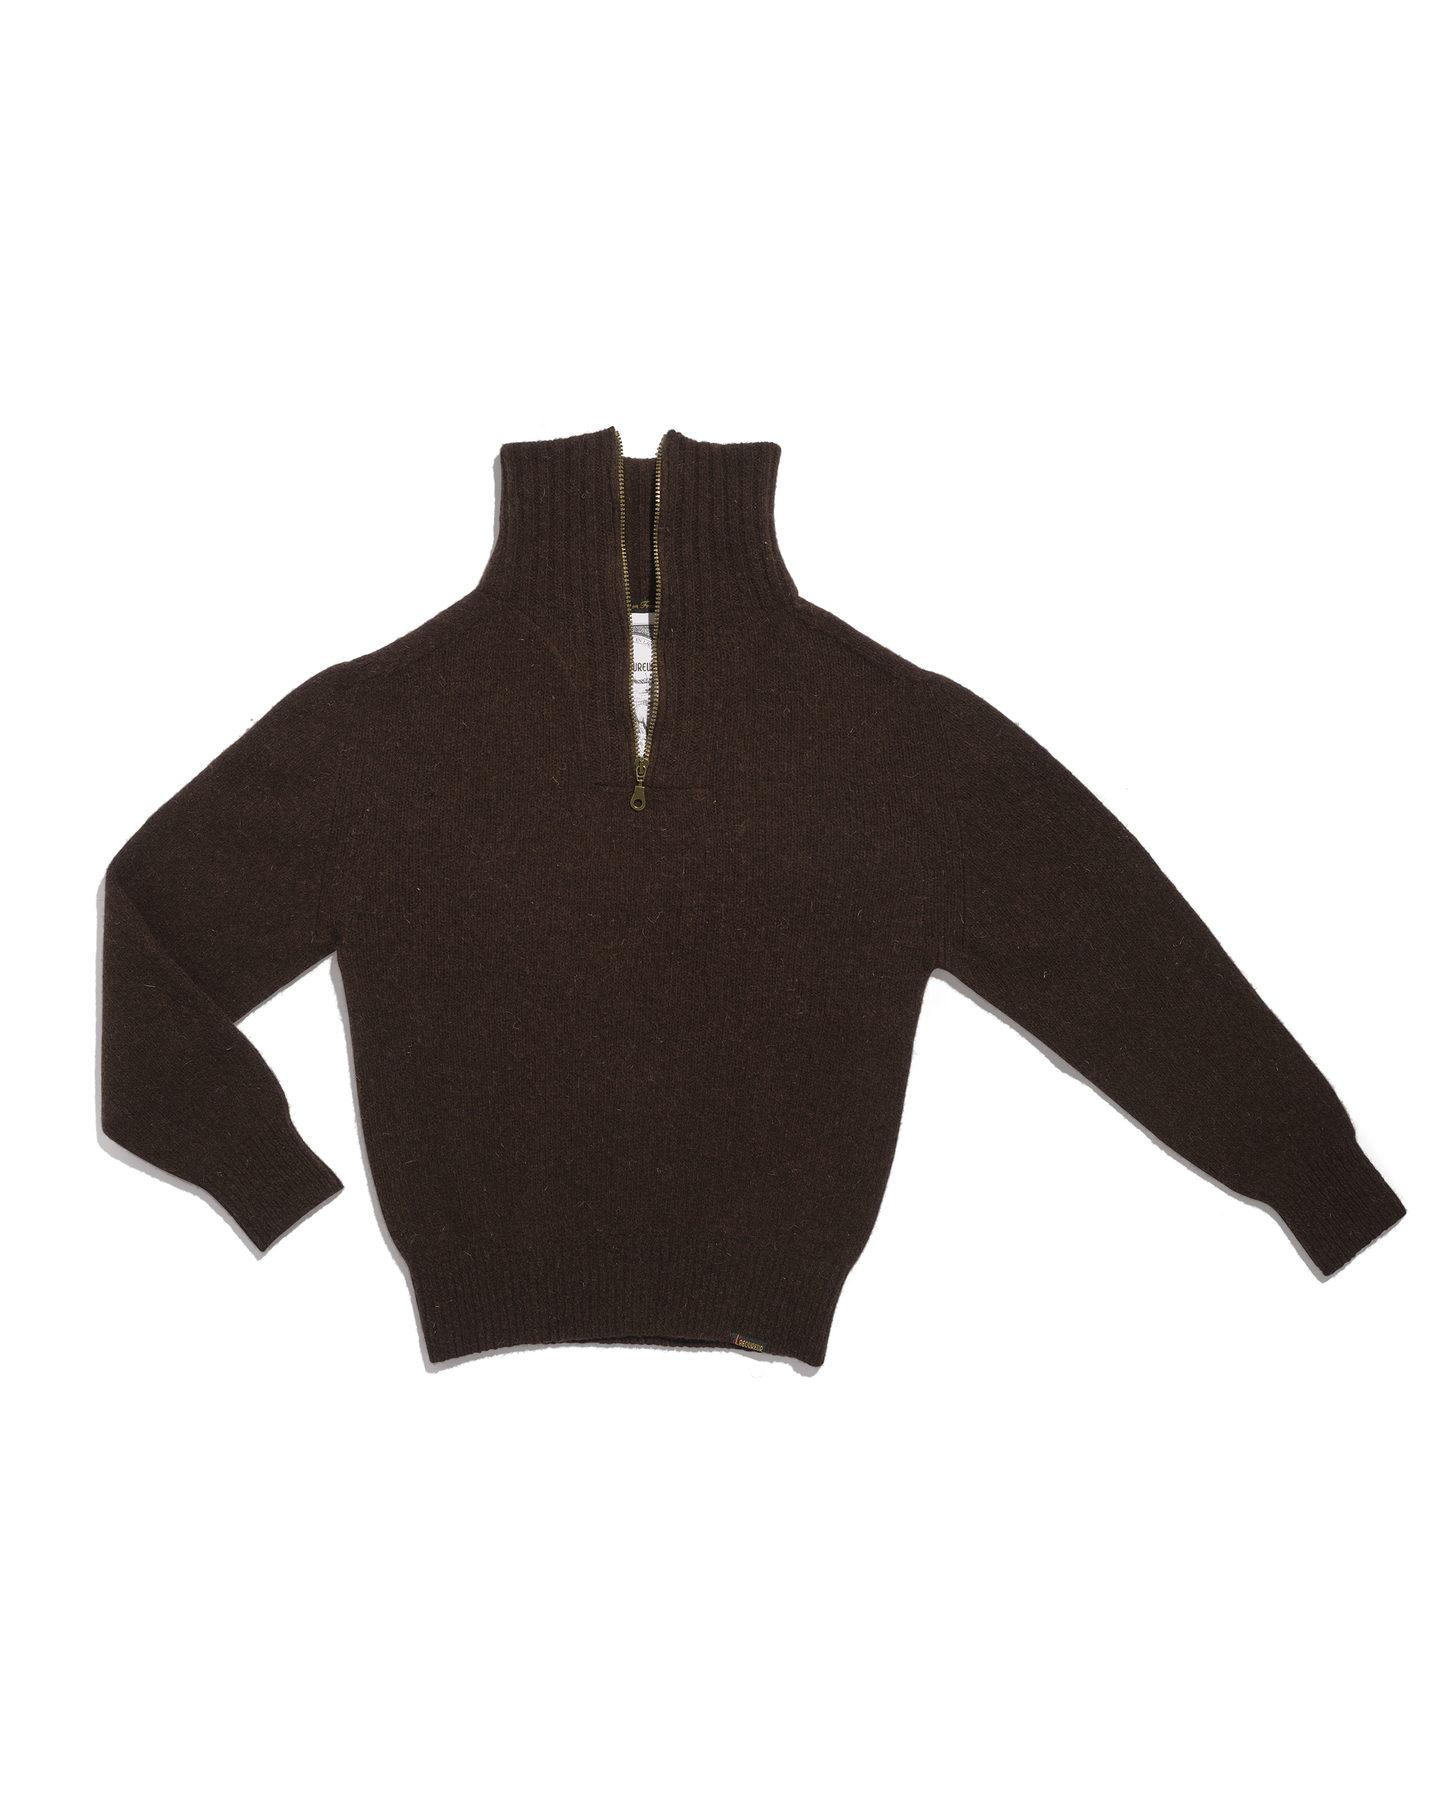 Trucker sweater made from brown burel wool